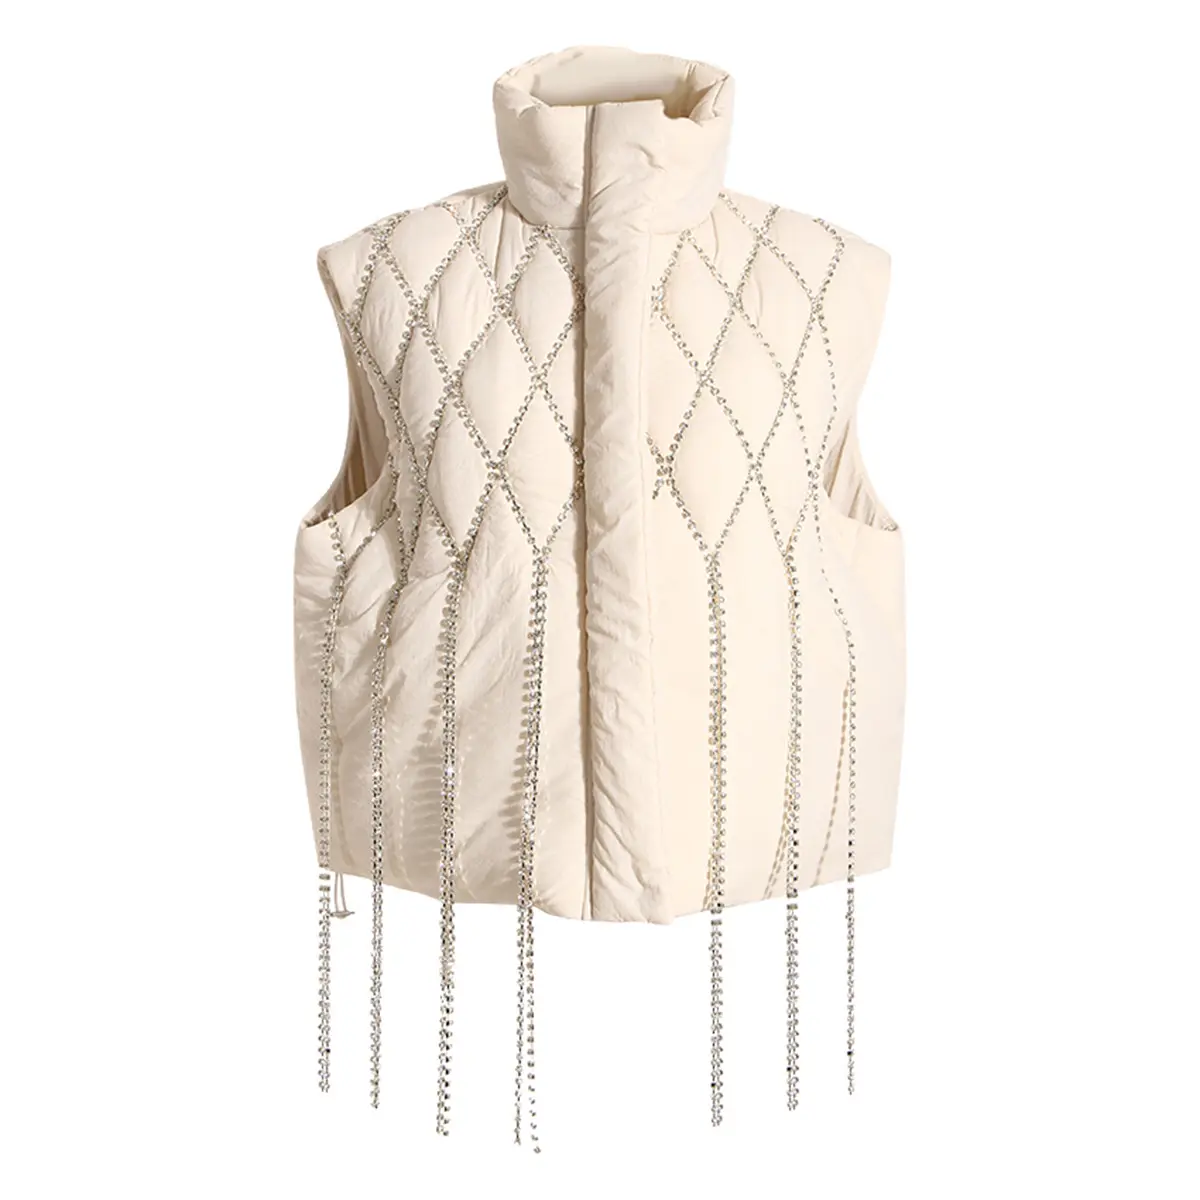 Quilted veste jacket diamond chain decoration ladies crop puffer vest rhinestone fringe women winter sleeveless coat